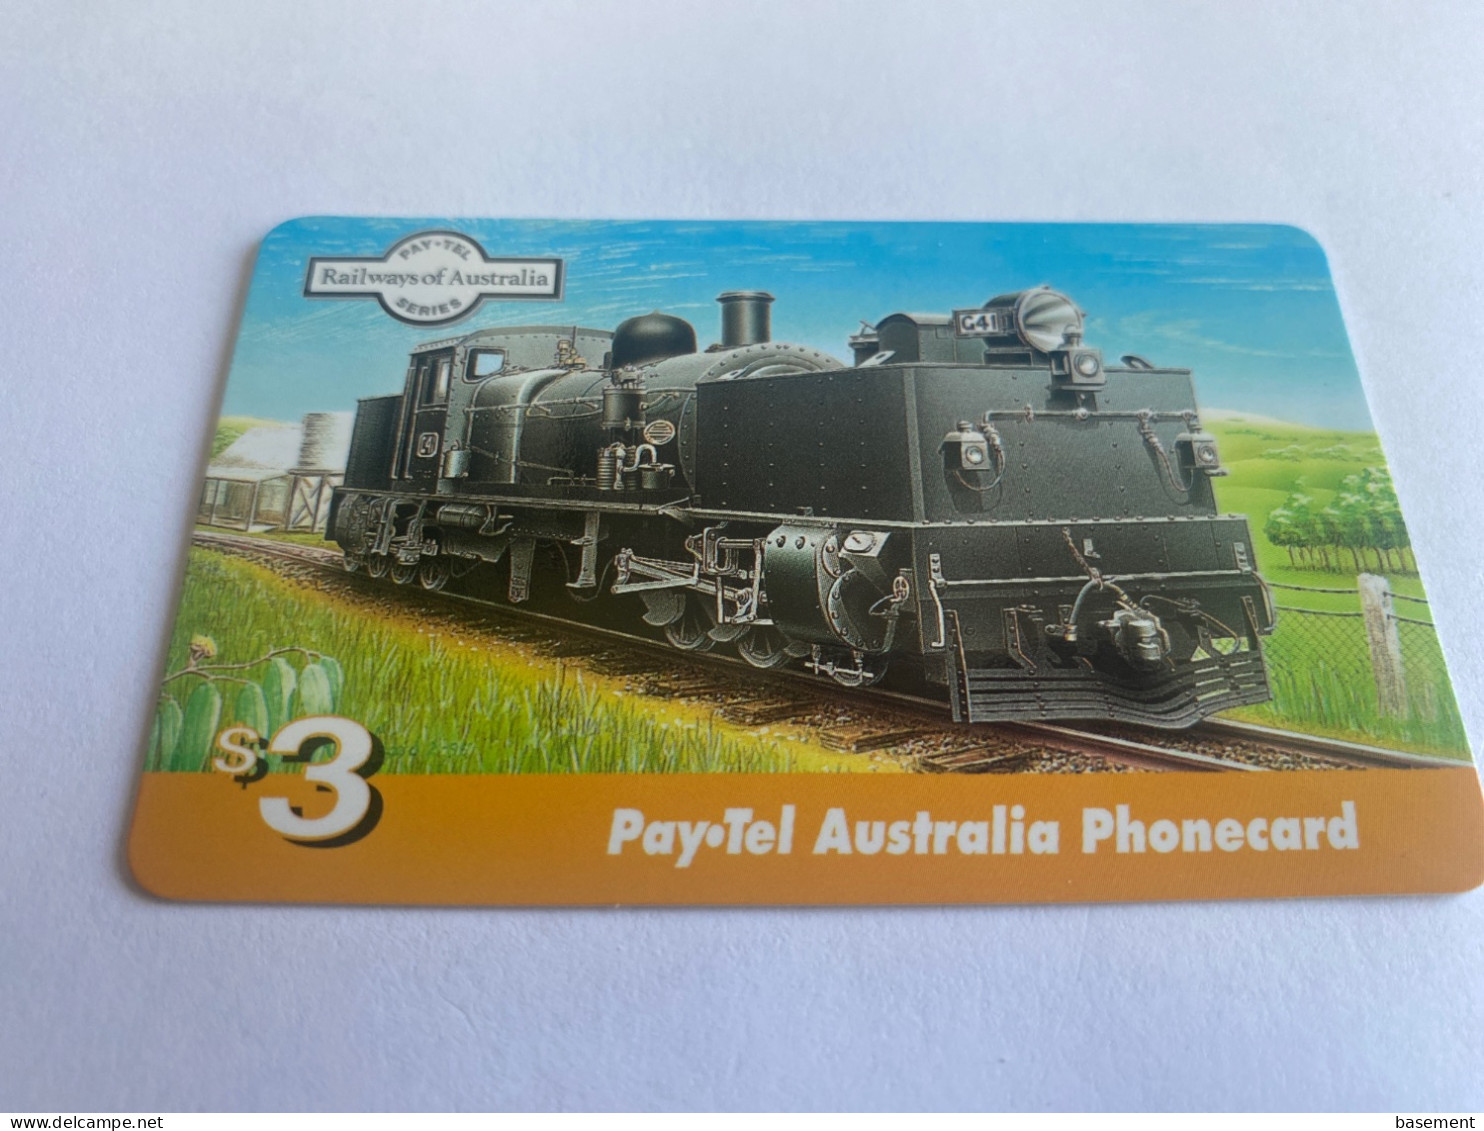 1:044 - Australia Pay Tel Railways Of Australia Train - Australia